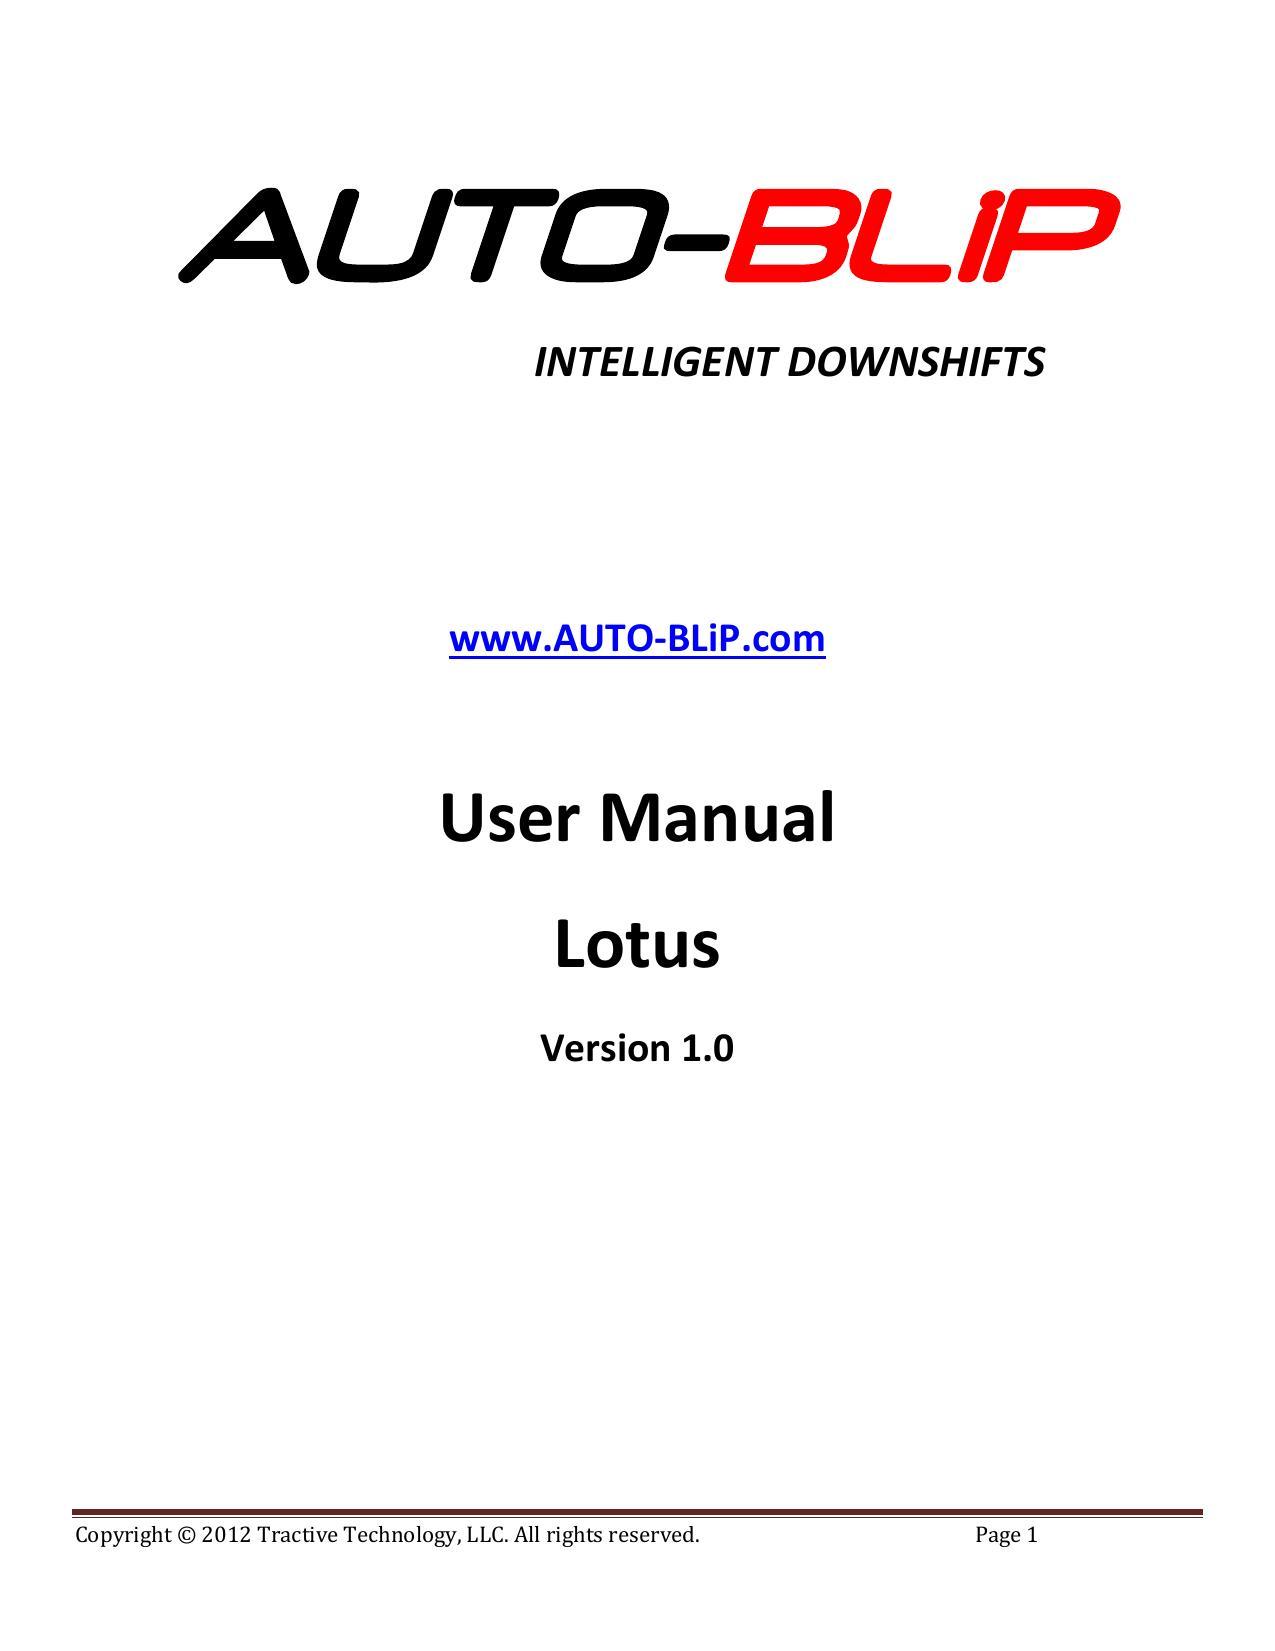 user-manual-for-lotus-auto-blip-version-10.pdf